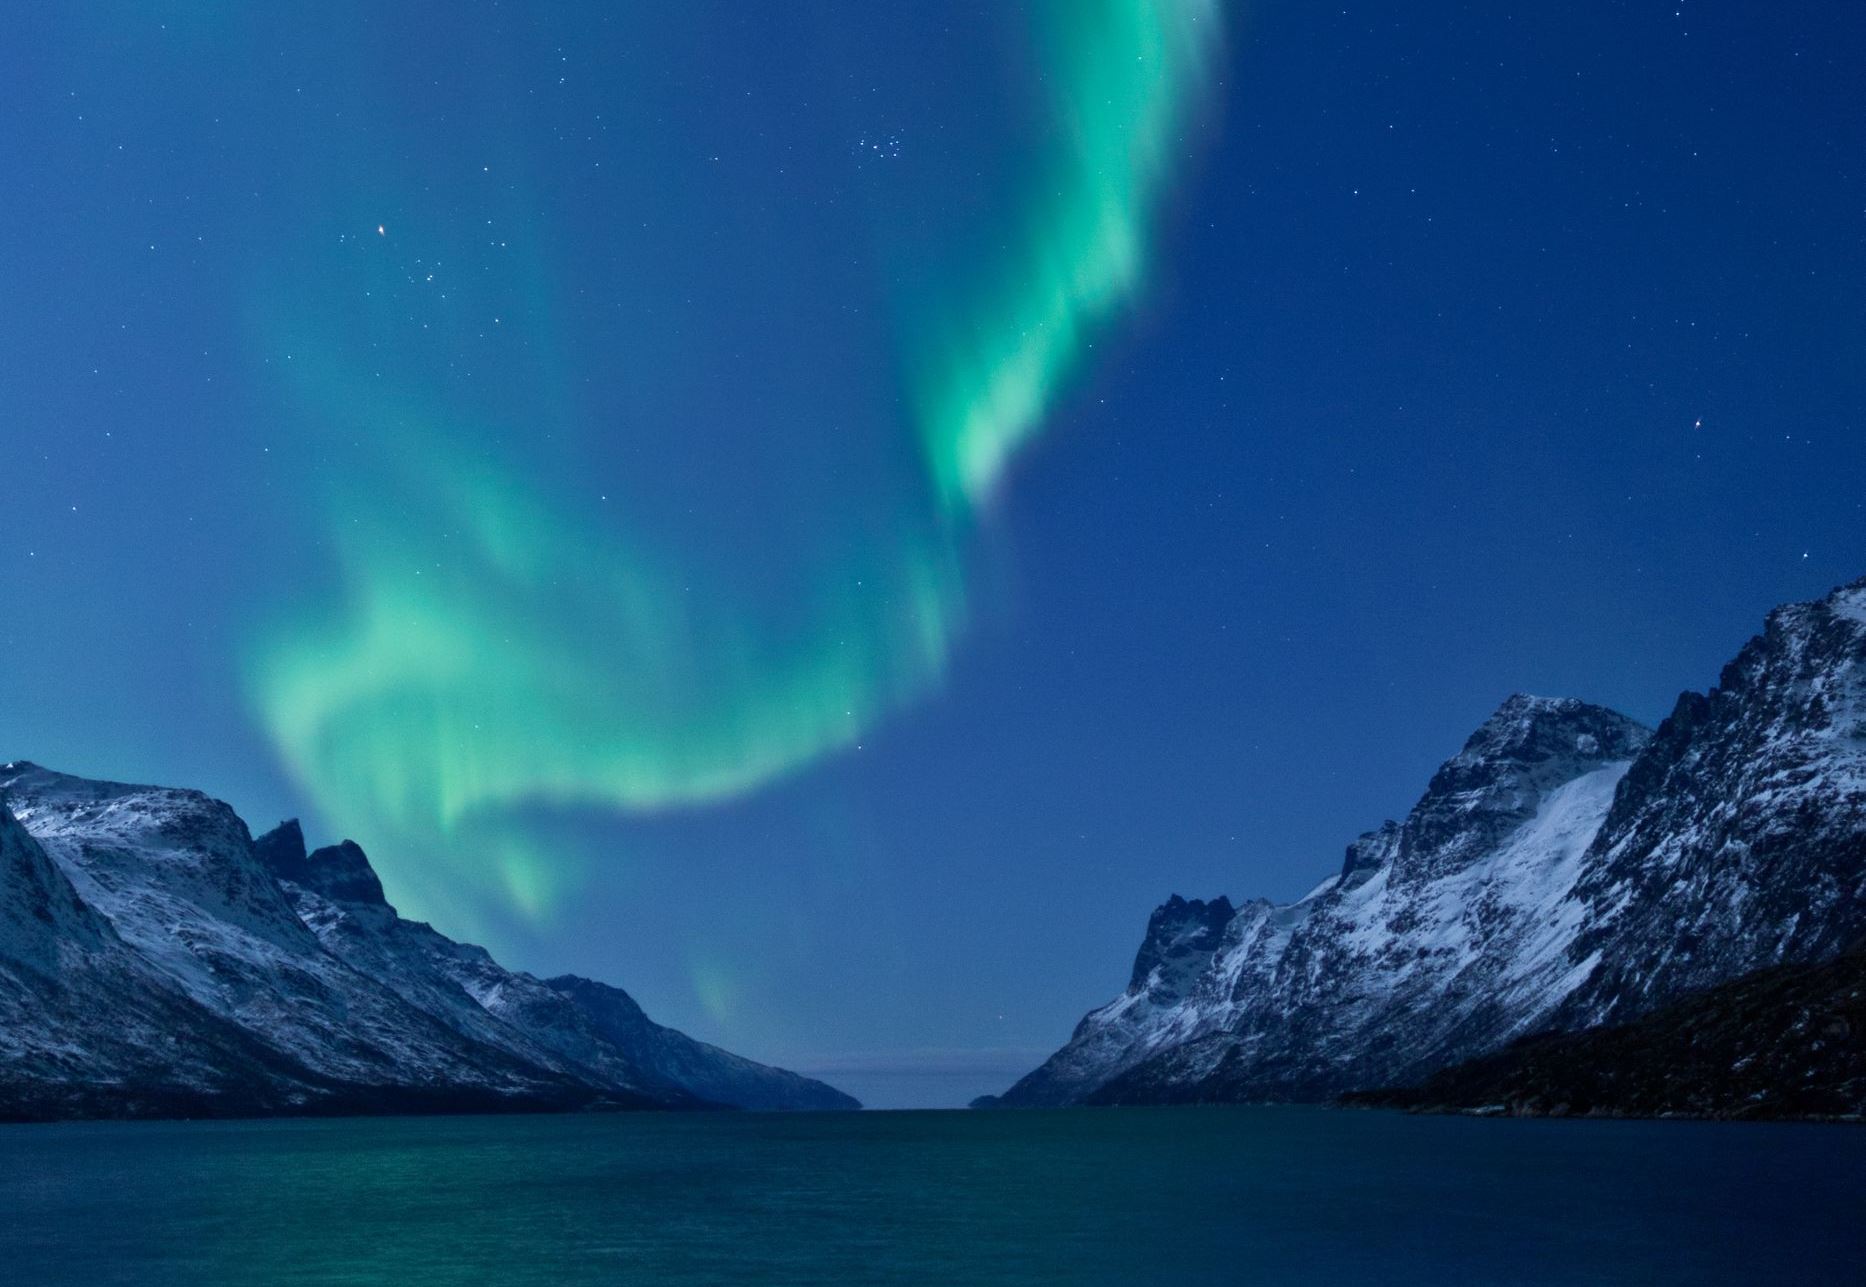 Aurora Borealis seen in Norway